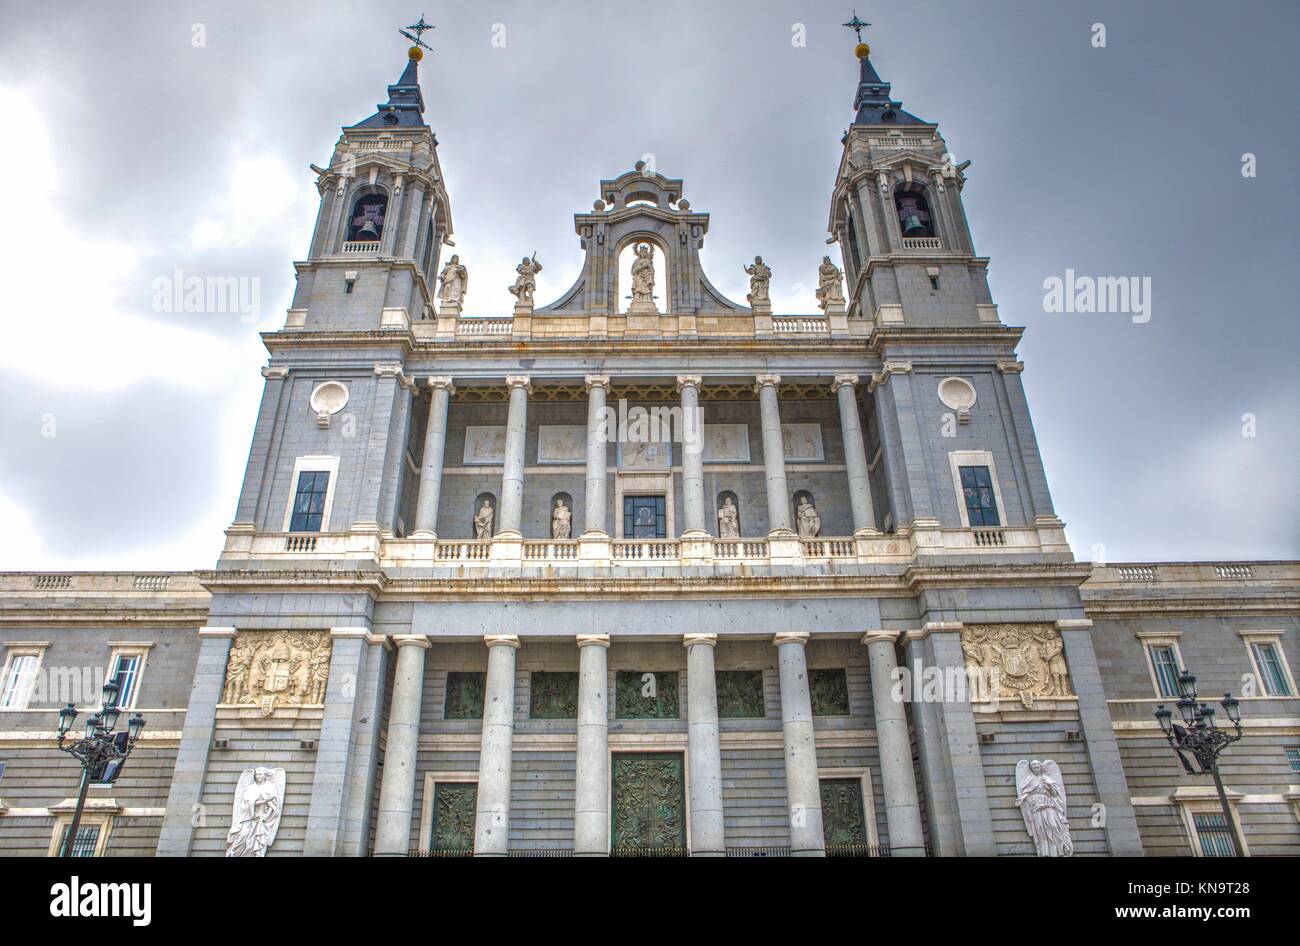 Facade of Cathedral of la Almudena, Madrid, Spain. Stock Photo